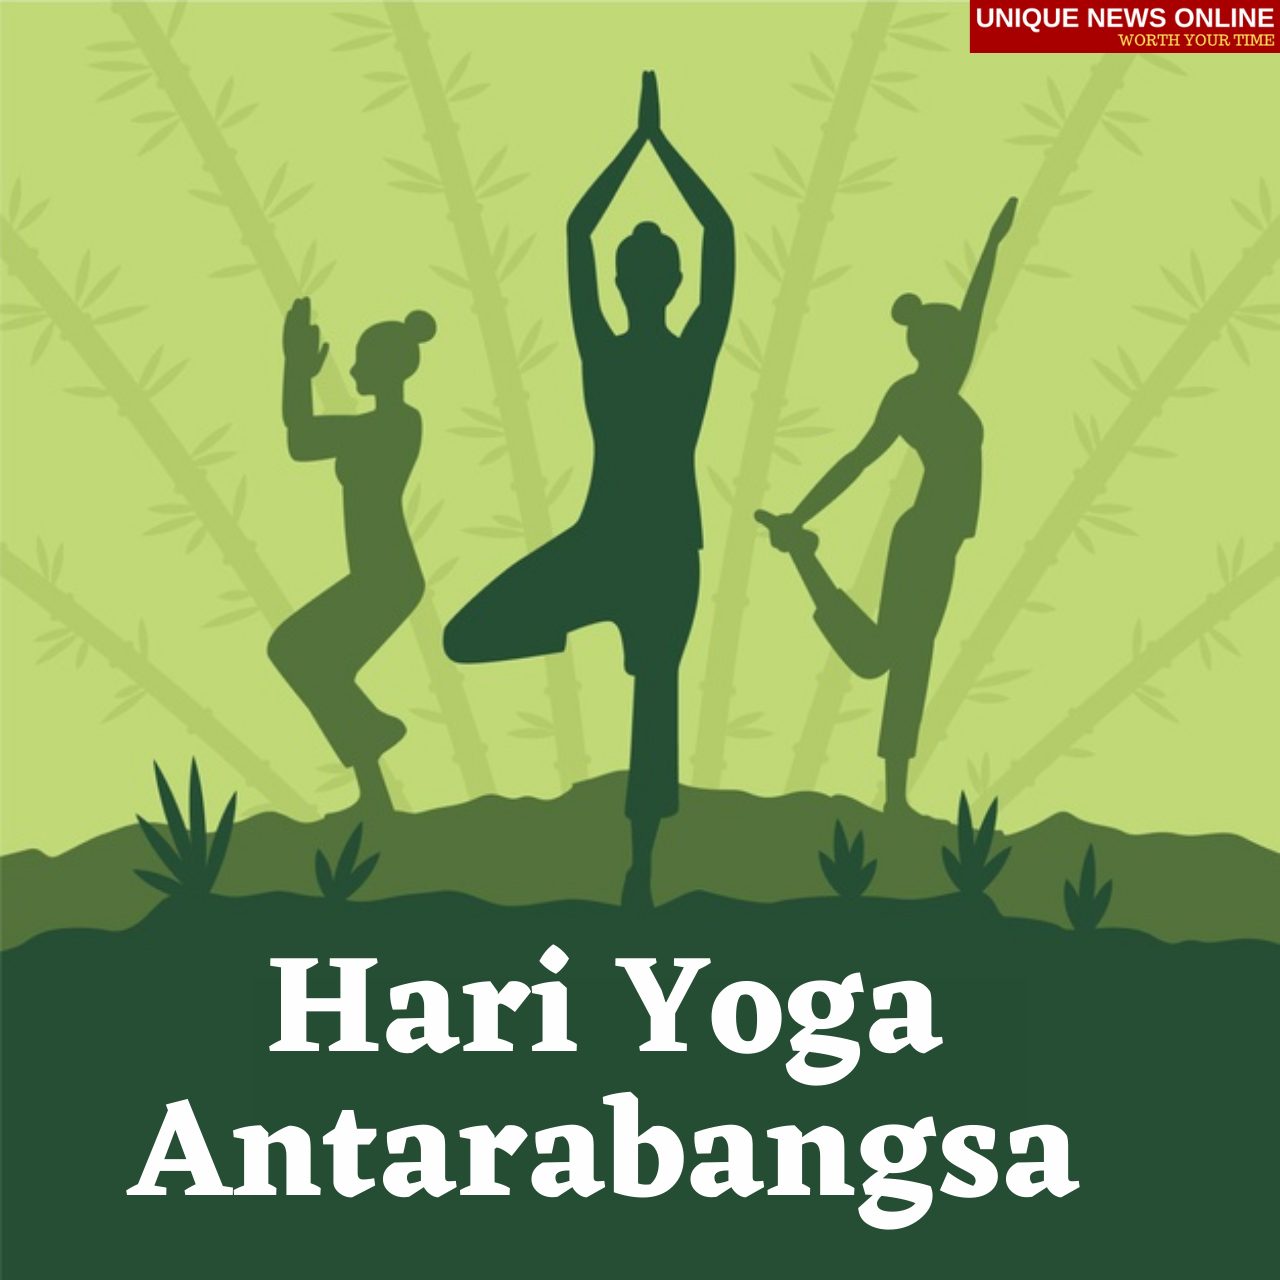 Hari Yoga Antarabangsa 2021: Malay Wishes, Images, Greetings, Quotes, and Messages to Share